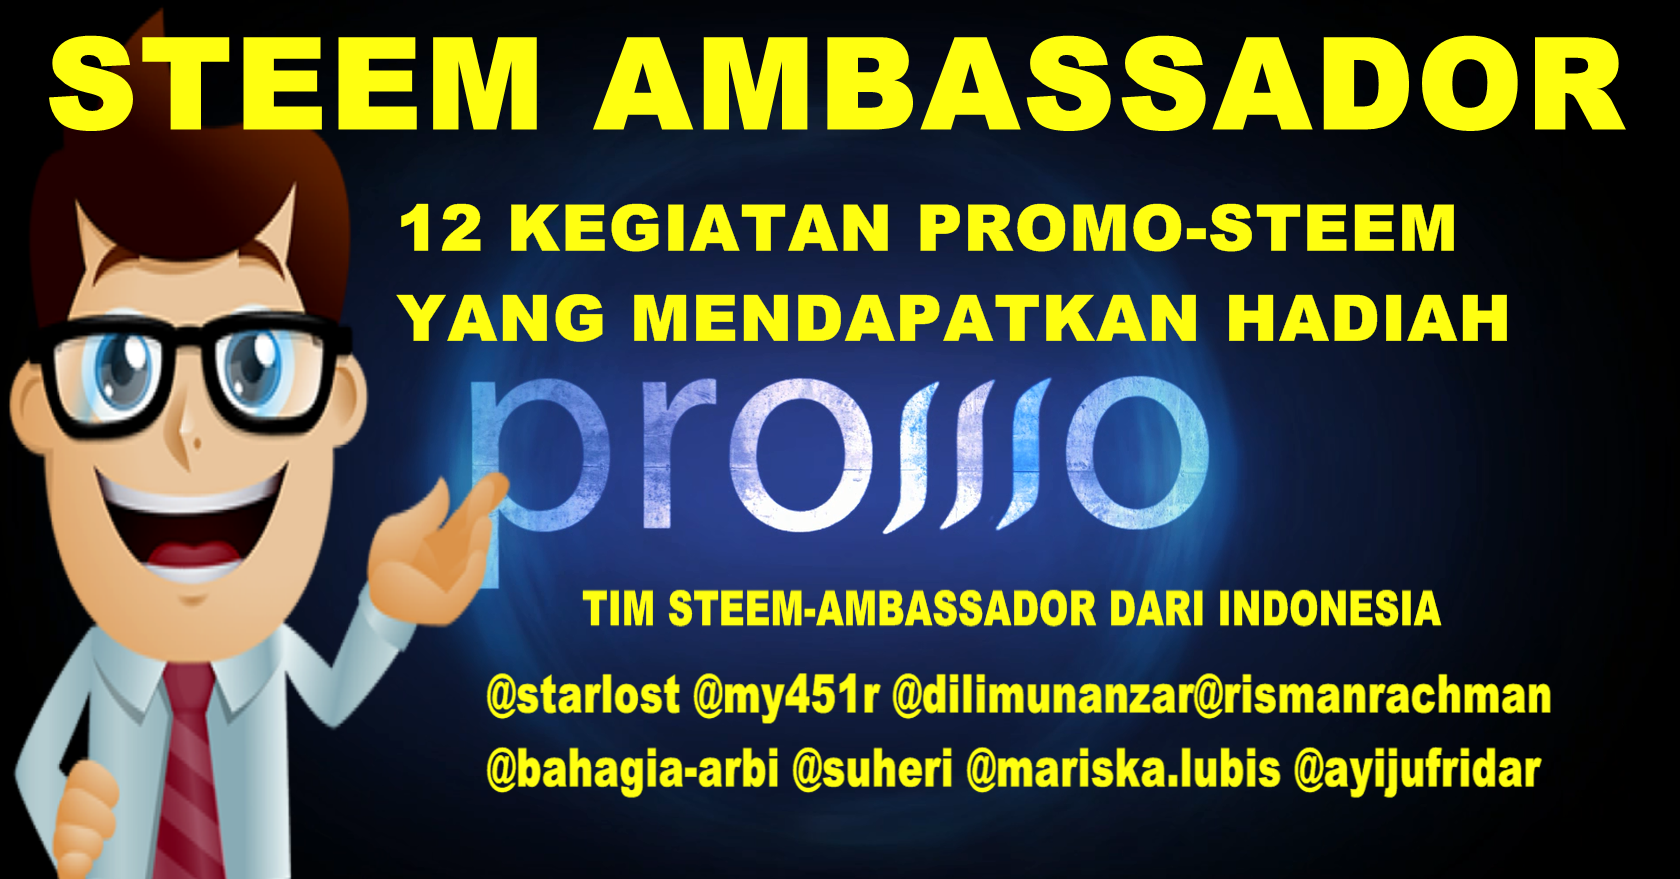 steem-ambassador.png